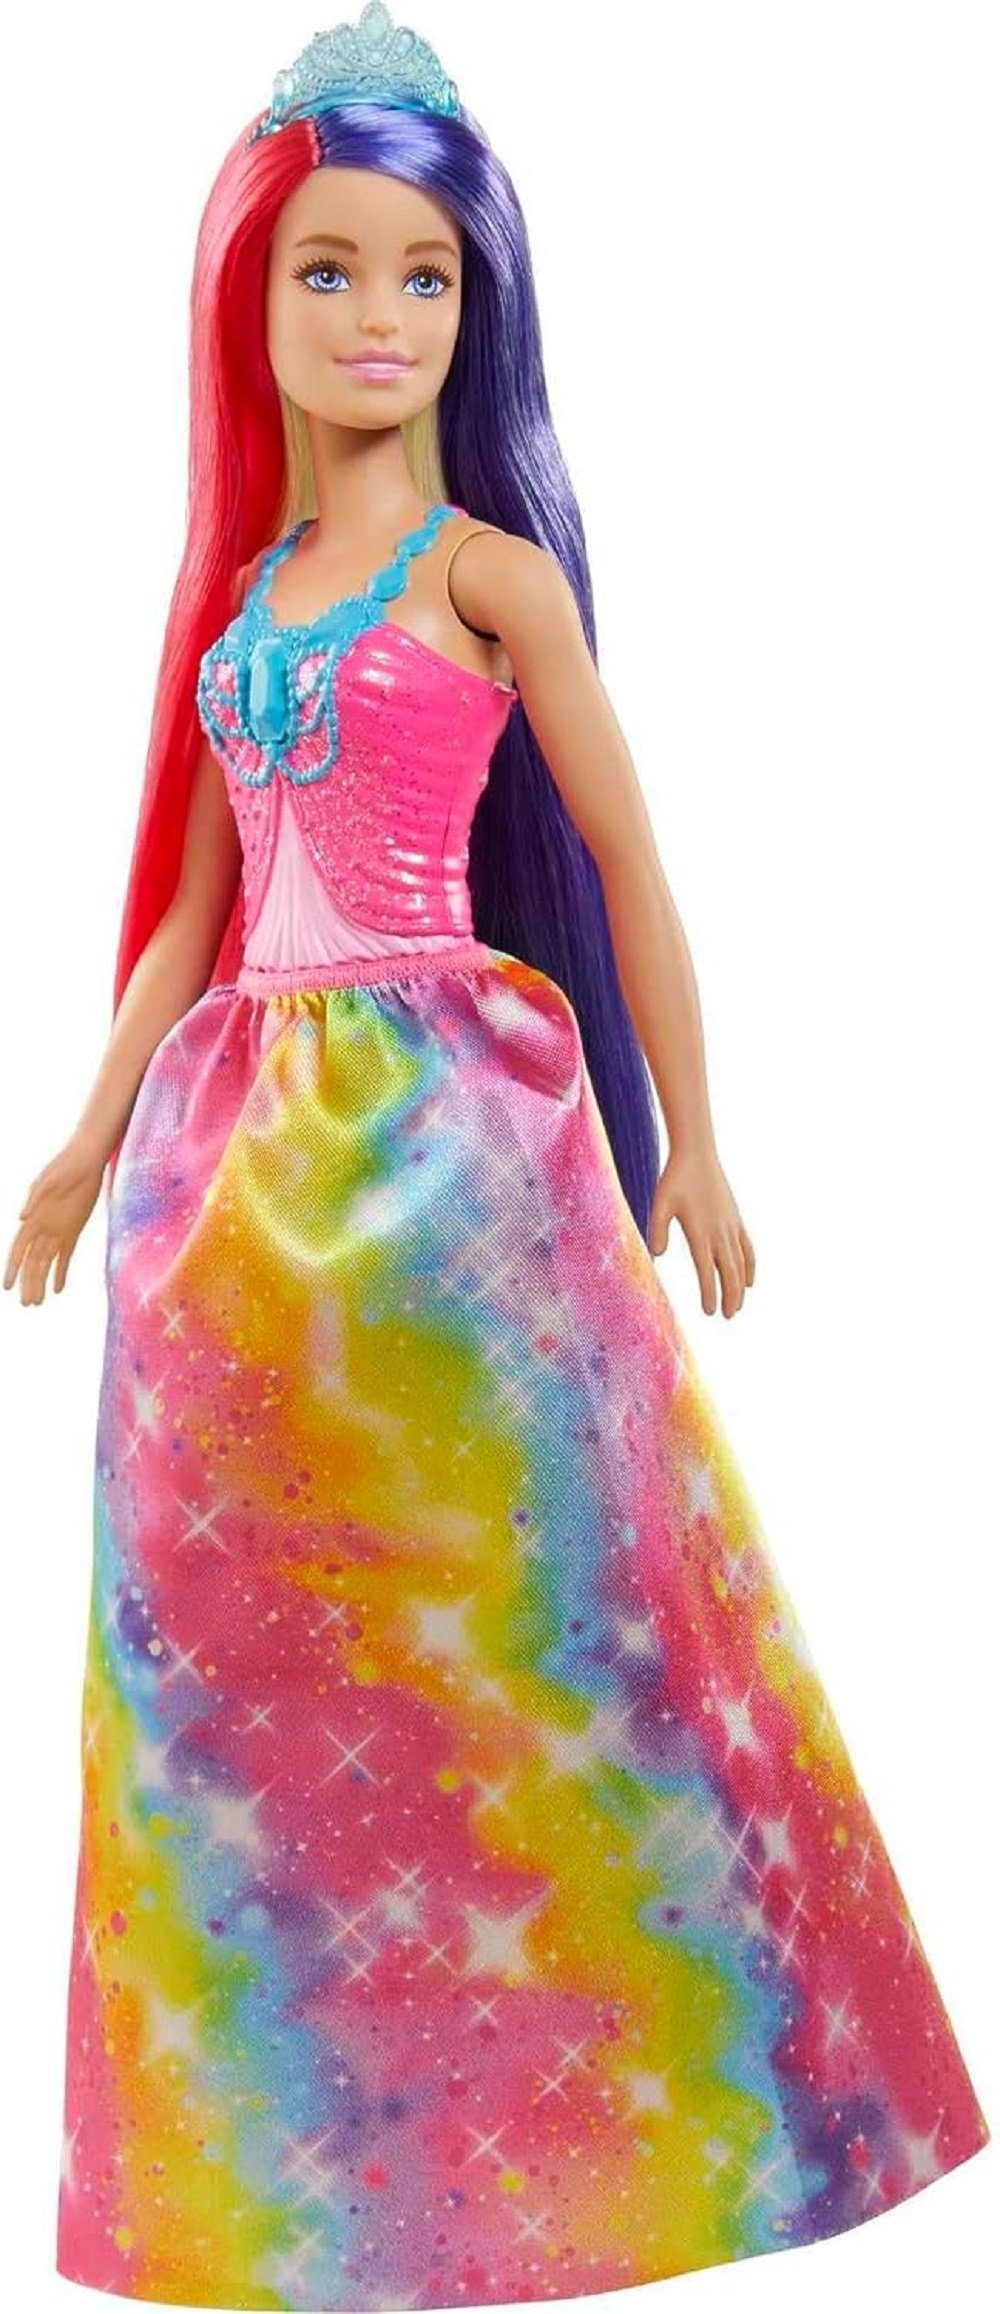 Mattel® Barbie Anziehpuppe Dreamtopia Prinzessin ca. 30cm Puppe mit langem Haar